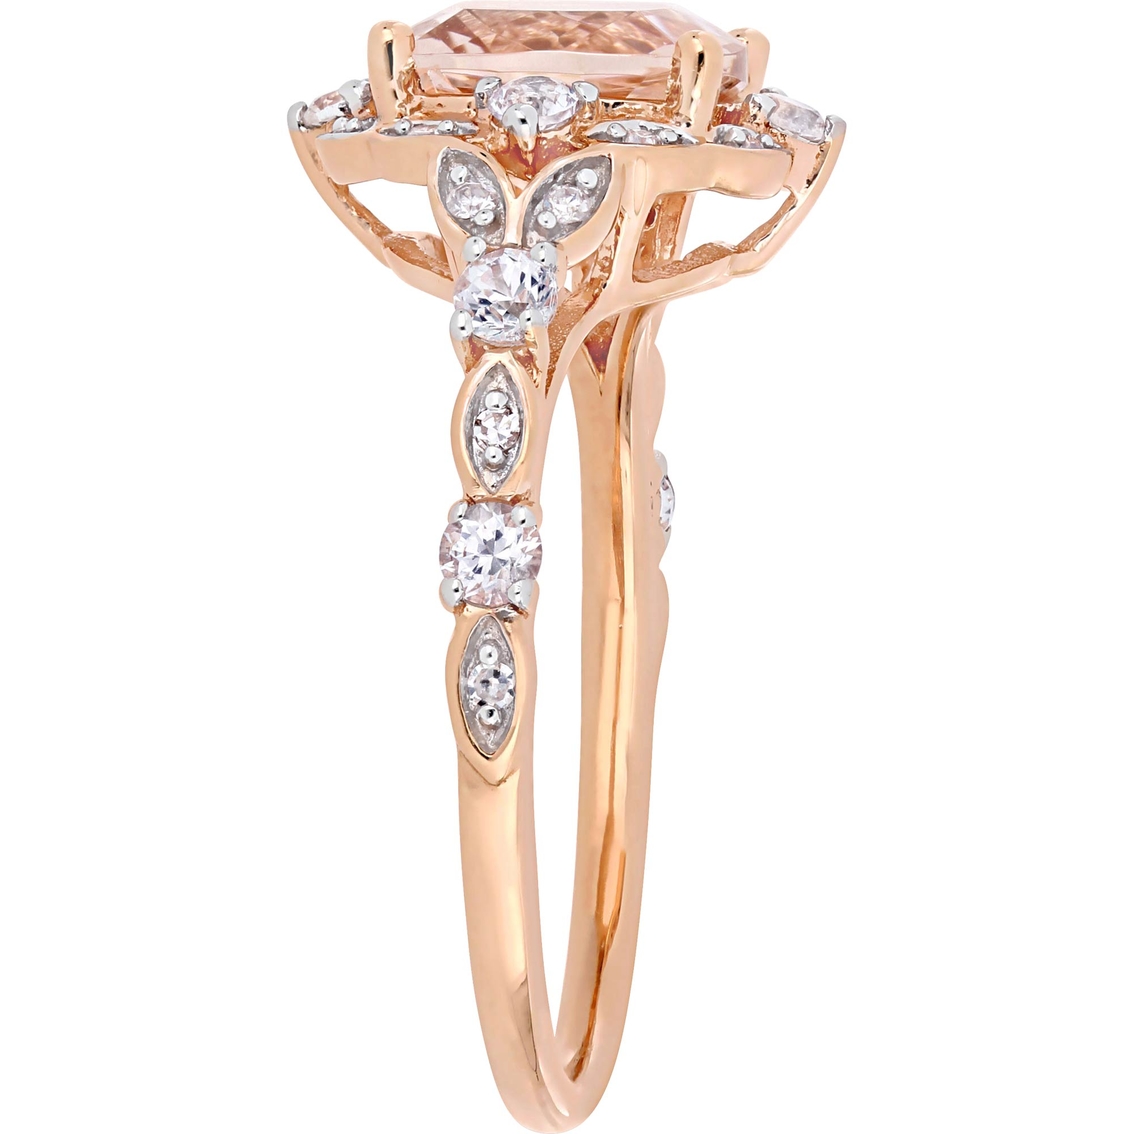 Sofia B. 14K Rose Gold Morganite White Sapphire Diamond Accent Vintage Ring - Image 2 of 4